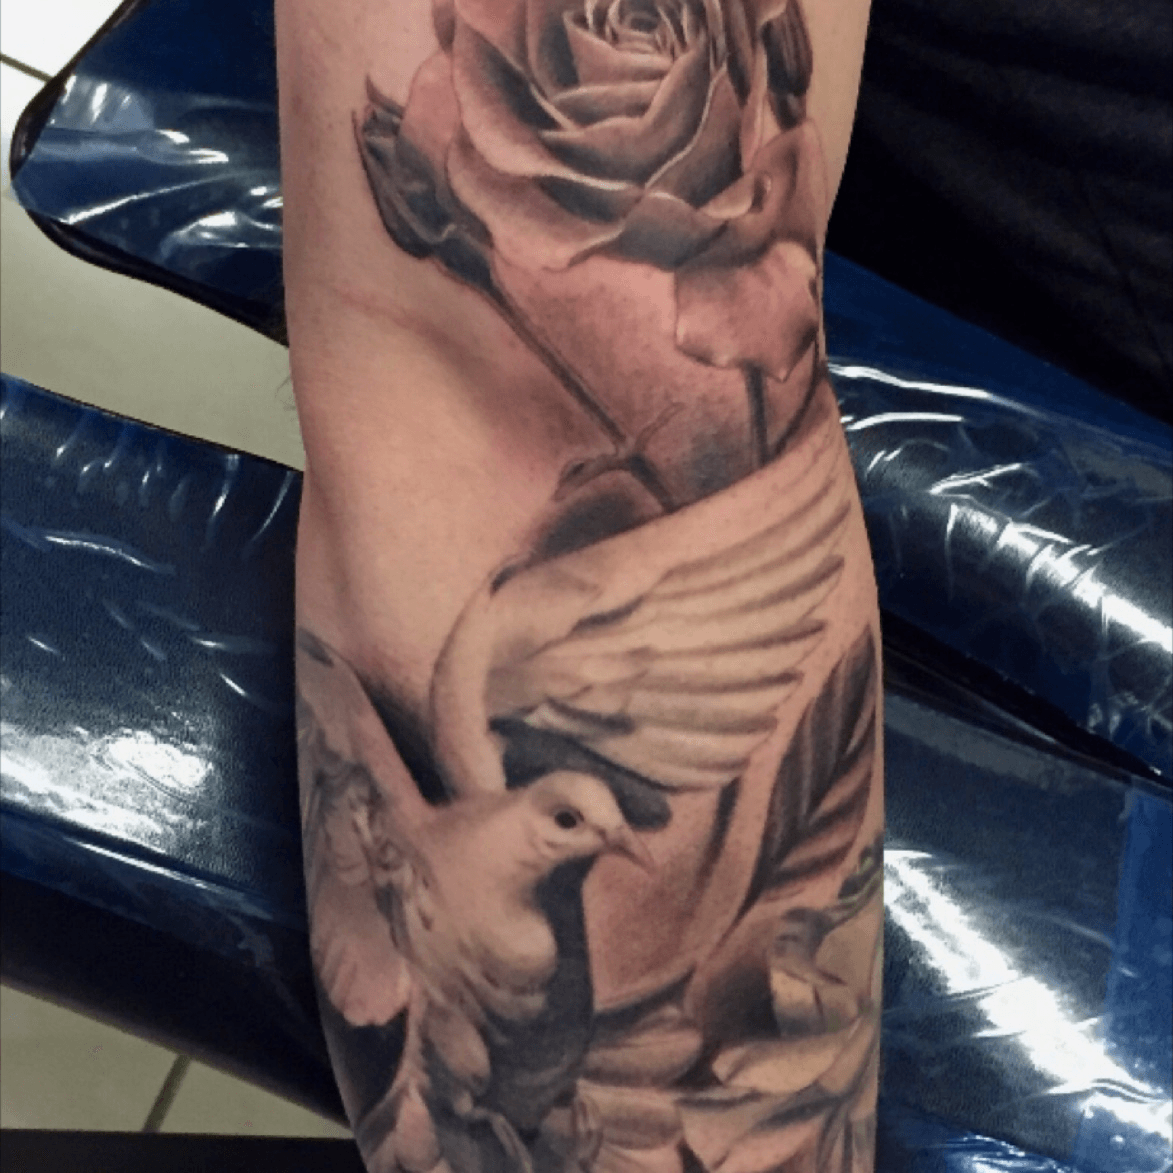 John Simkins on Twitter tattoo bng ink rose art dove hand  httpstcoqP1WwP8n68  X